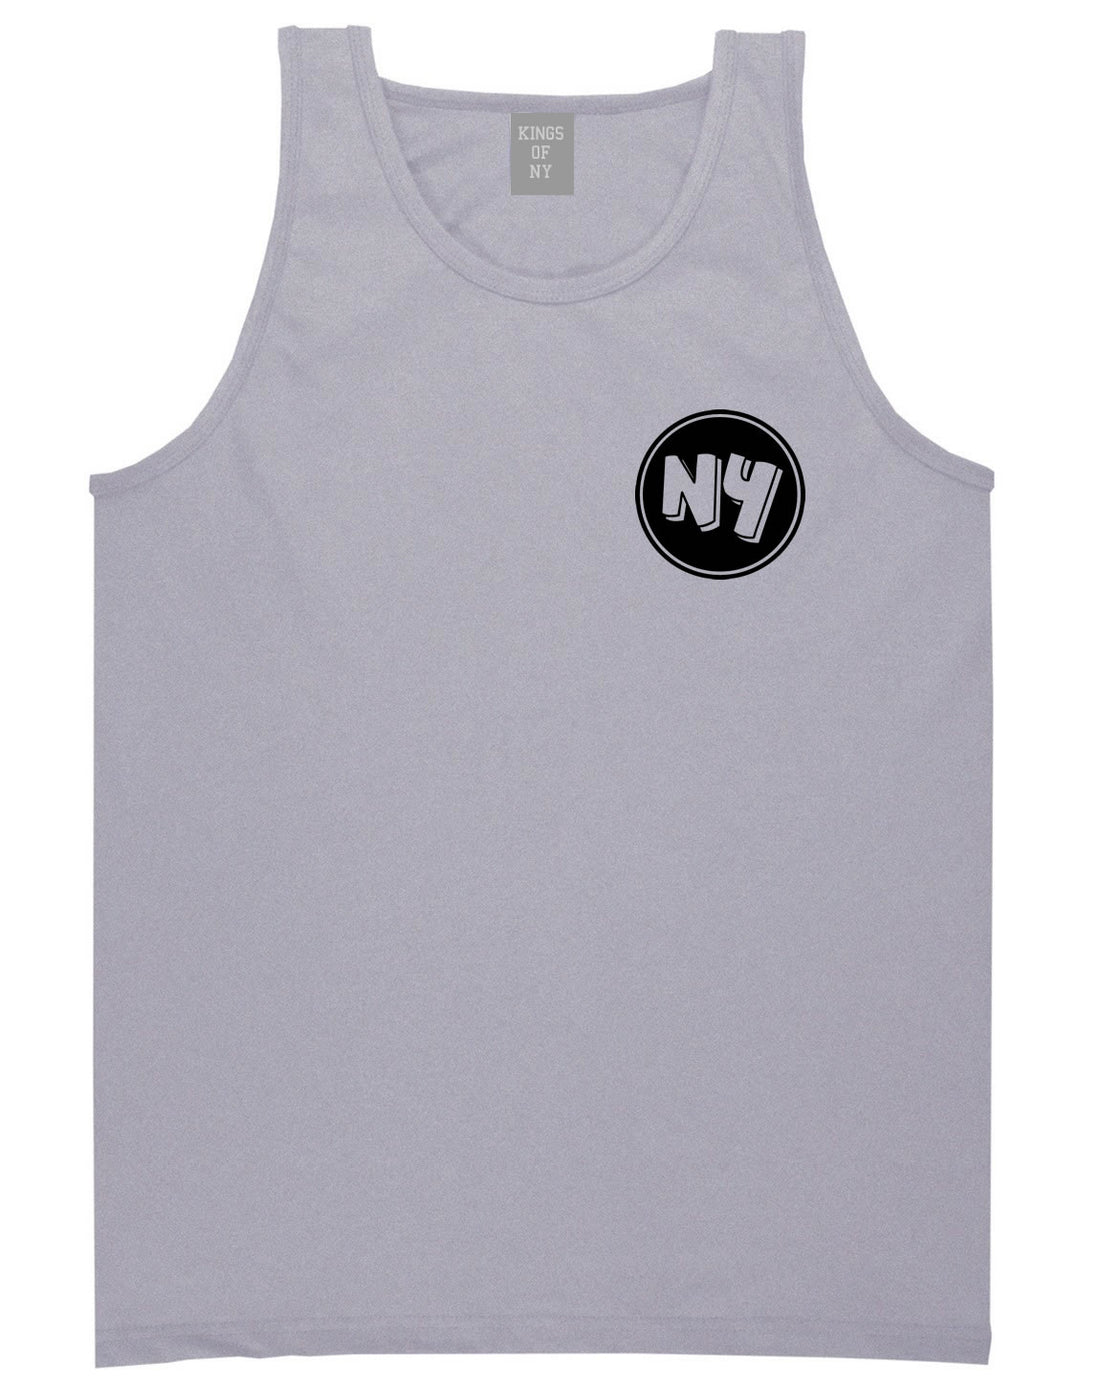 NY Circle Chest Logo Tank Top in Grey By Kings Of NY